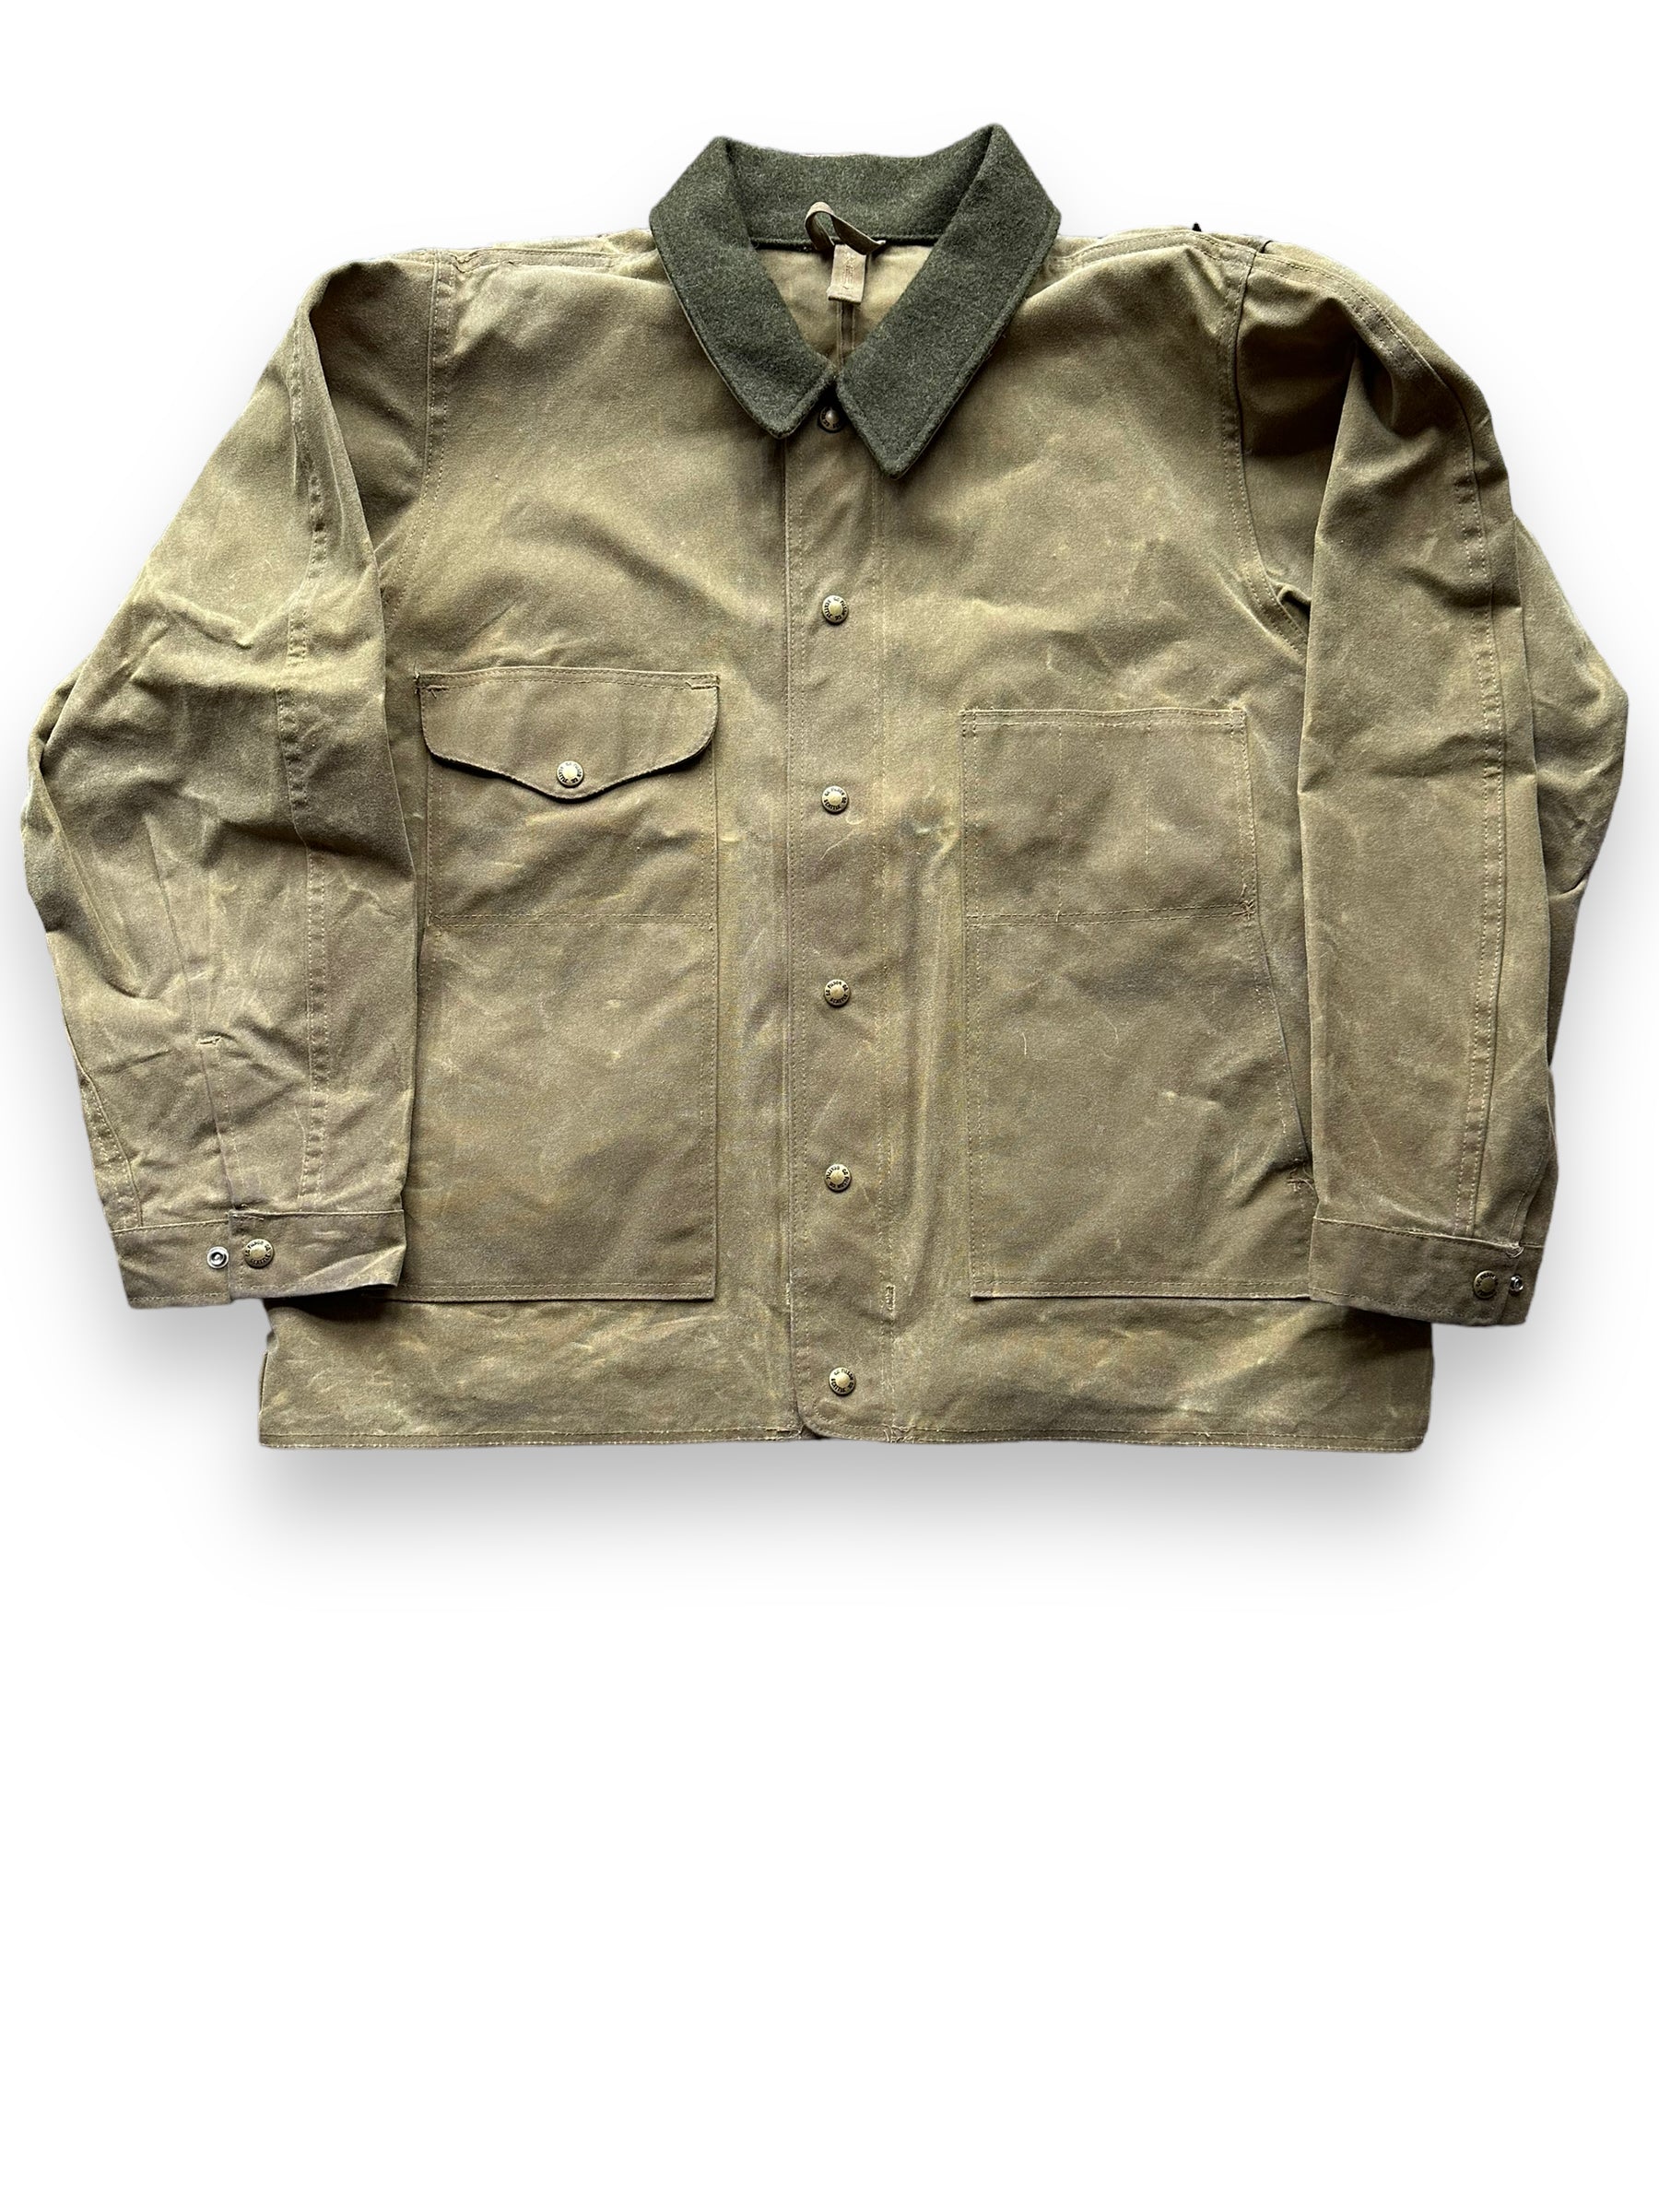 Front View of Filson Tin Cloth Jacket SZ XL |  Barn Owl Vintage Goods | Filson Workwear Seattle